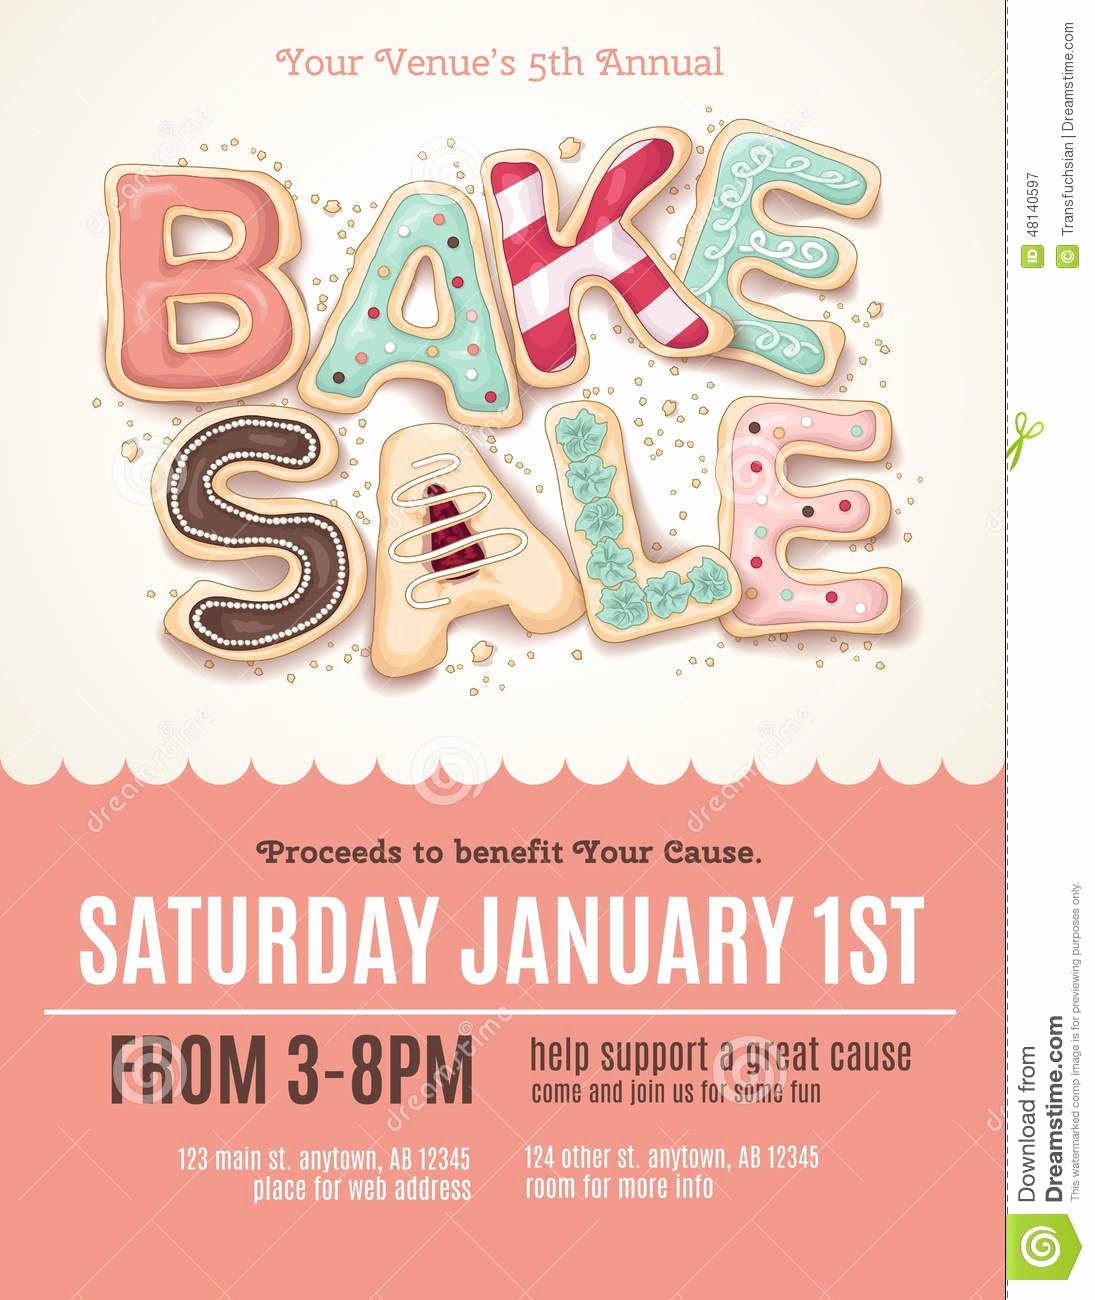 Bake Sale Flyer Template Word Unique Fun Cookie Bake Sale Flyer Template Download From Over